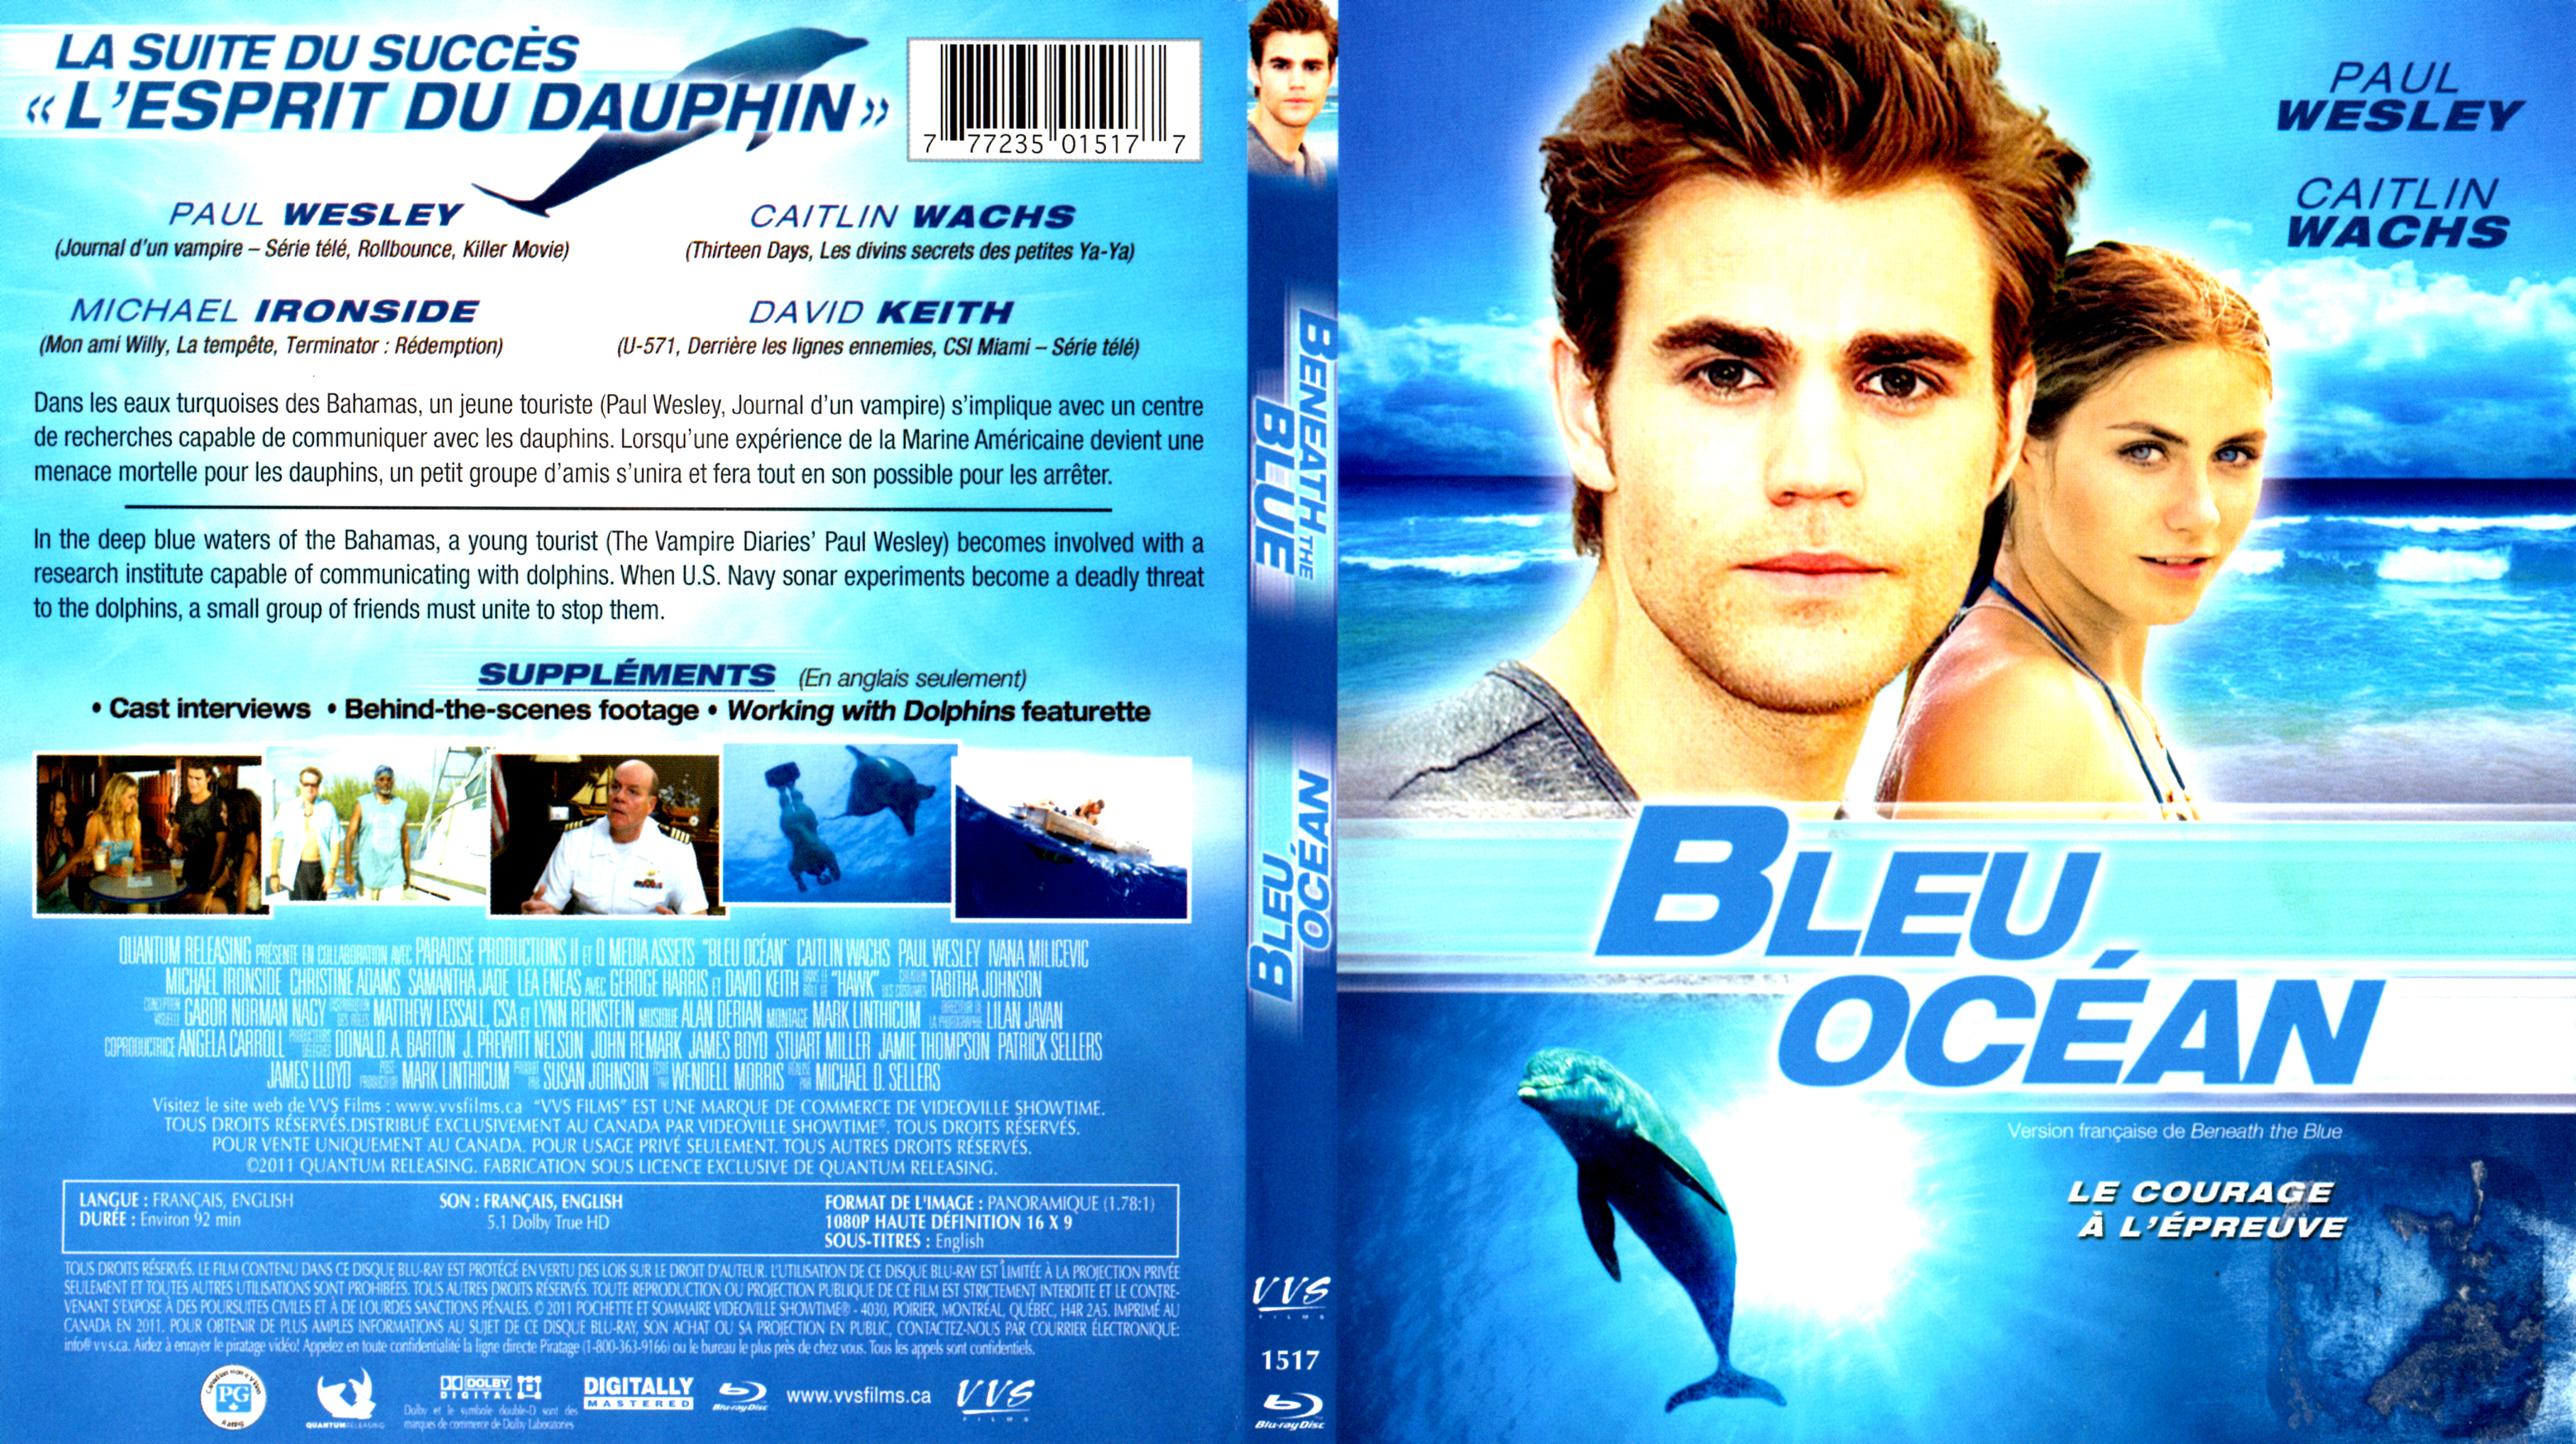 Jaquette DVD Bleu ocean (Canadienne) (BLU-RAY)